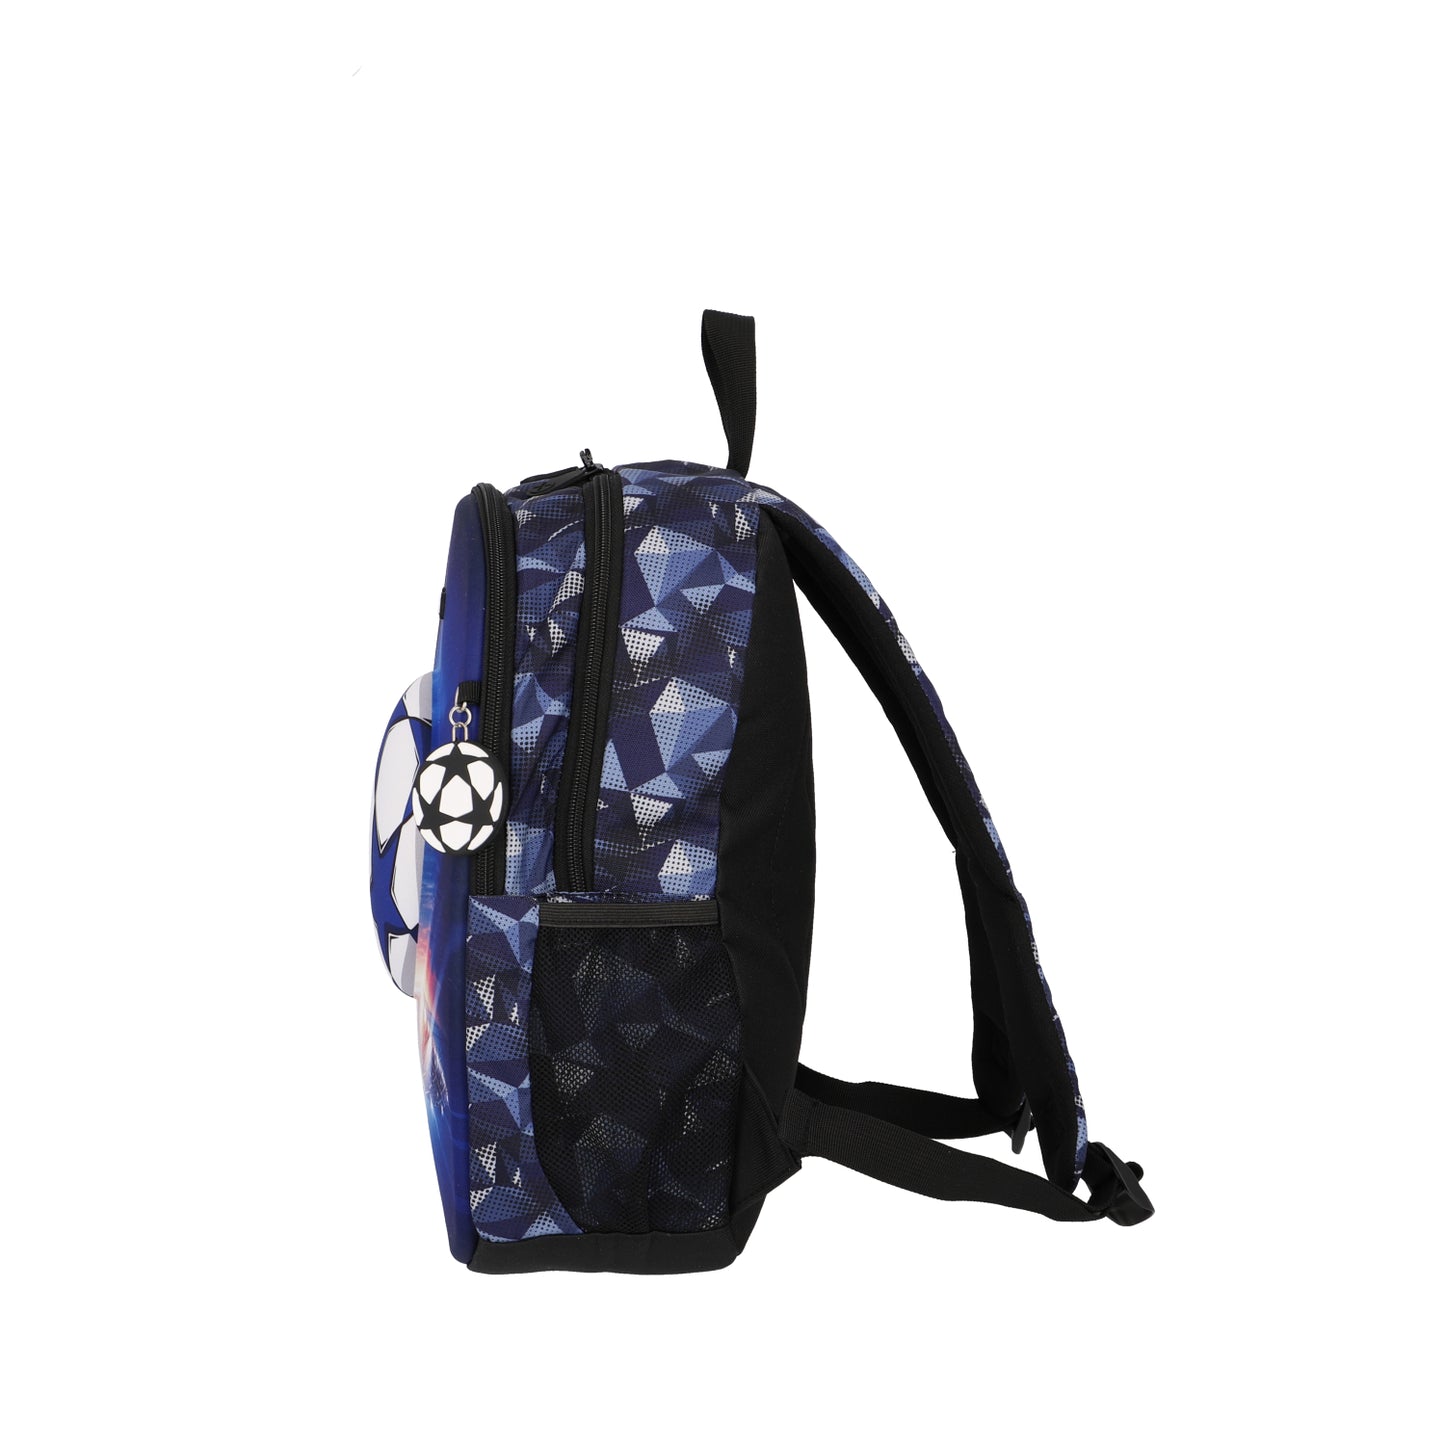 Mochila School Backpack Mini Boom 212 Blue Footb